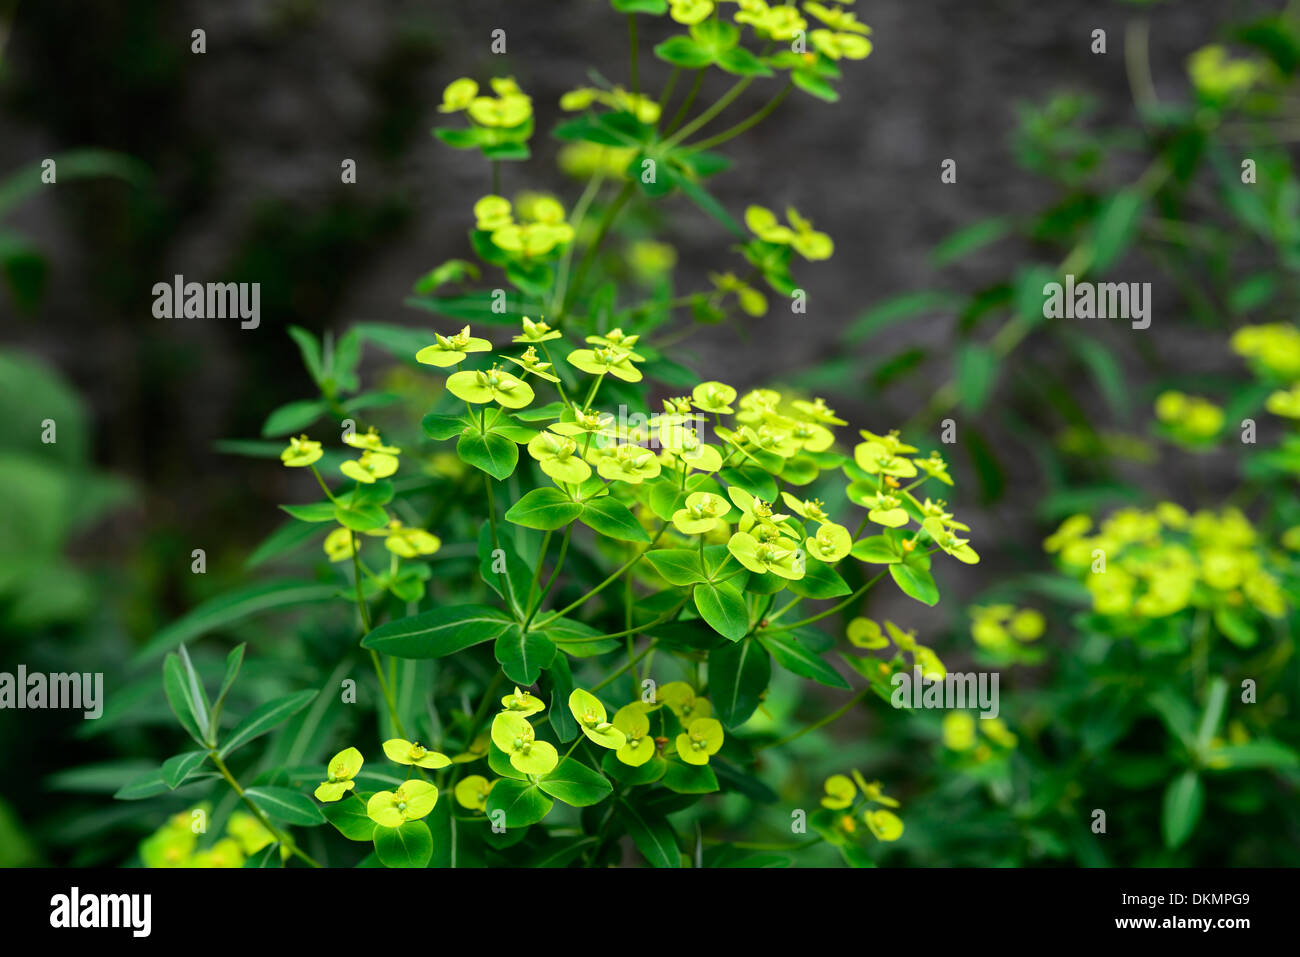 euphorbia excalibur froeup spurge milkweeds yellow flowers green foliage leaves plant portraits perennials Stock Photo